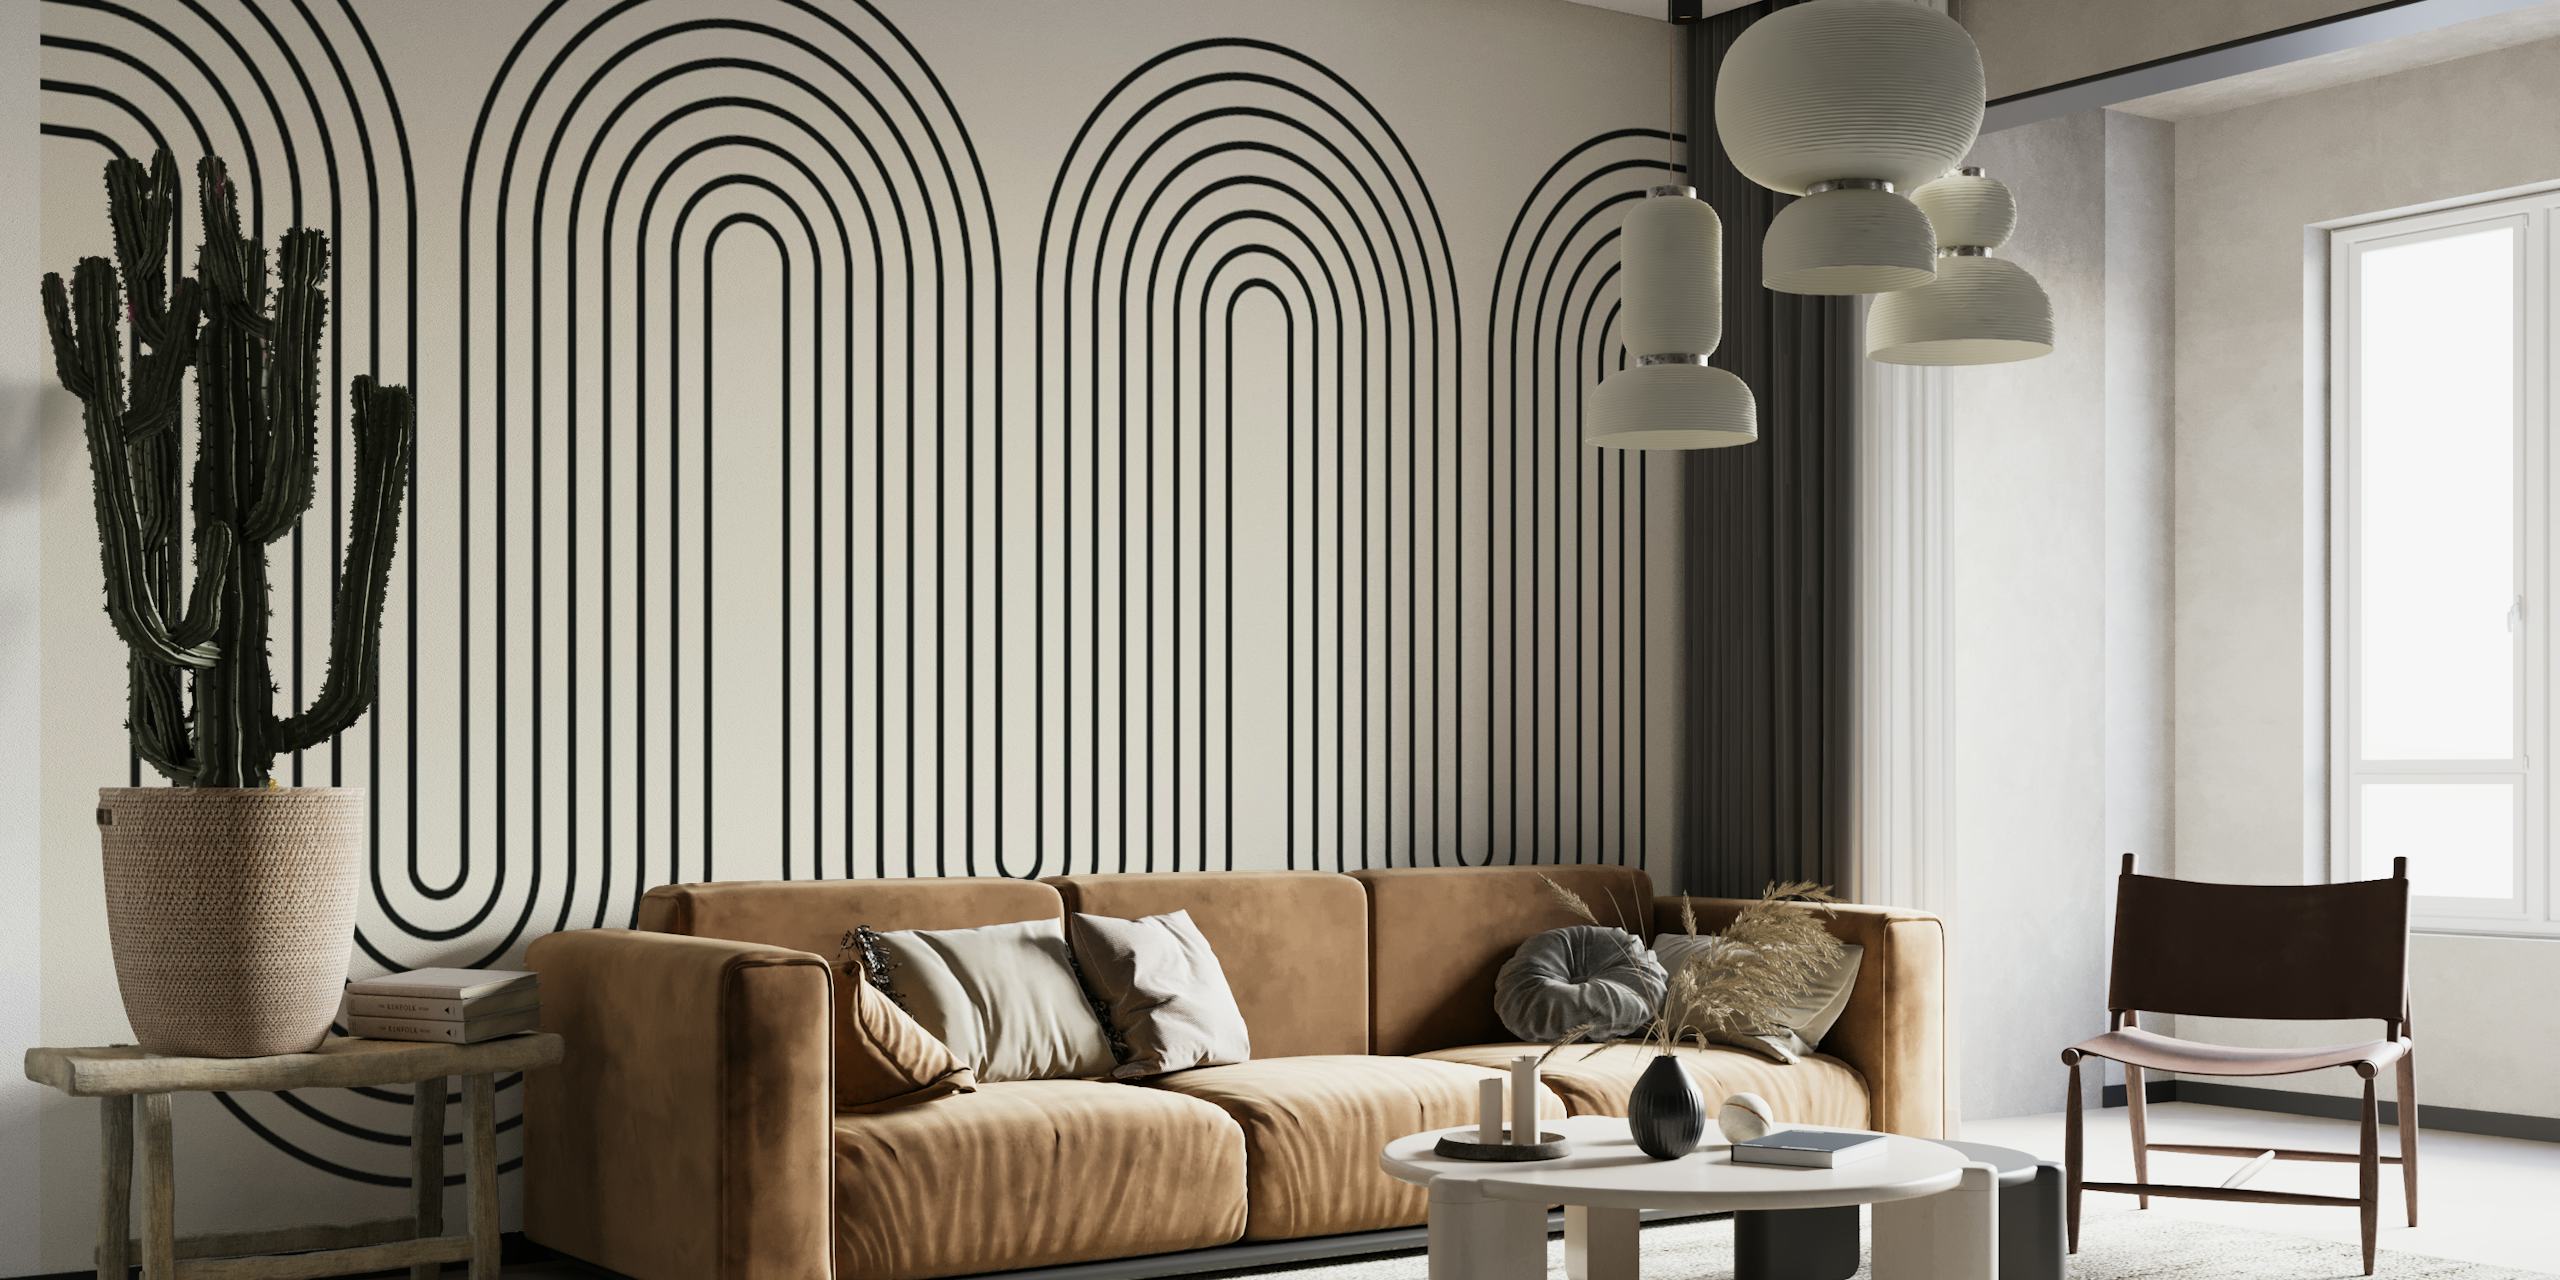 Moderne minimalistisk bølgetapet vægmaleri i gråtoner